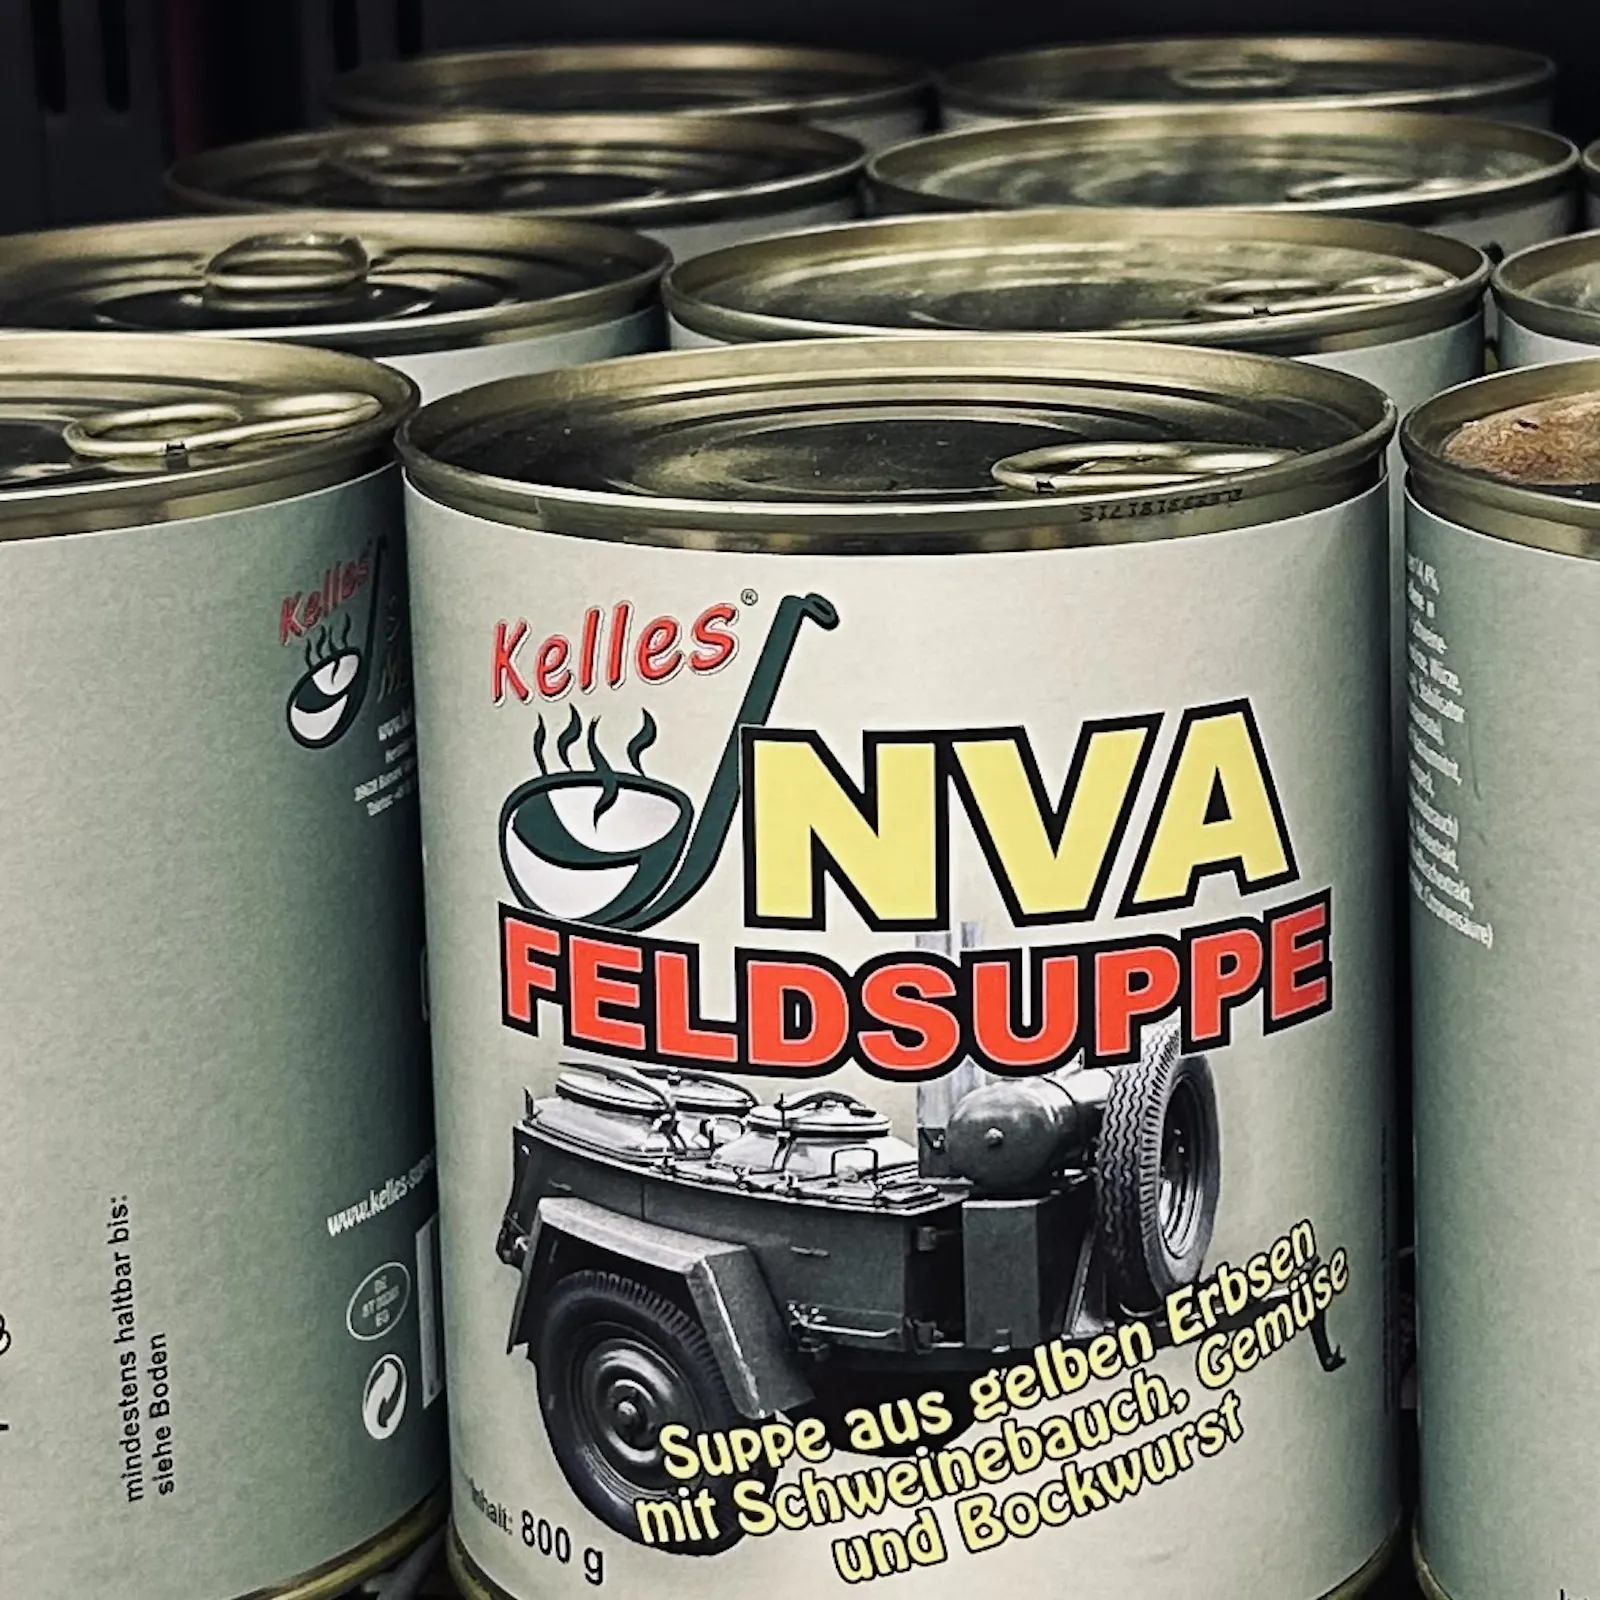 Eintopfdosen im Militärdesign mit Aufschrift: NVA-Suppe